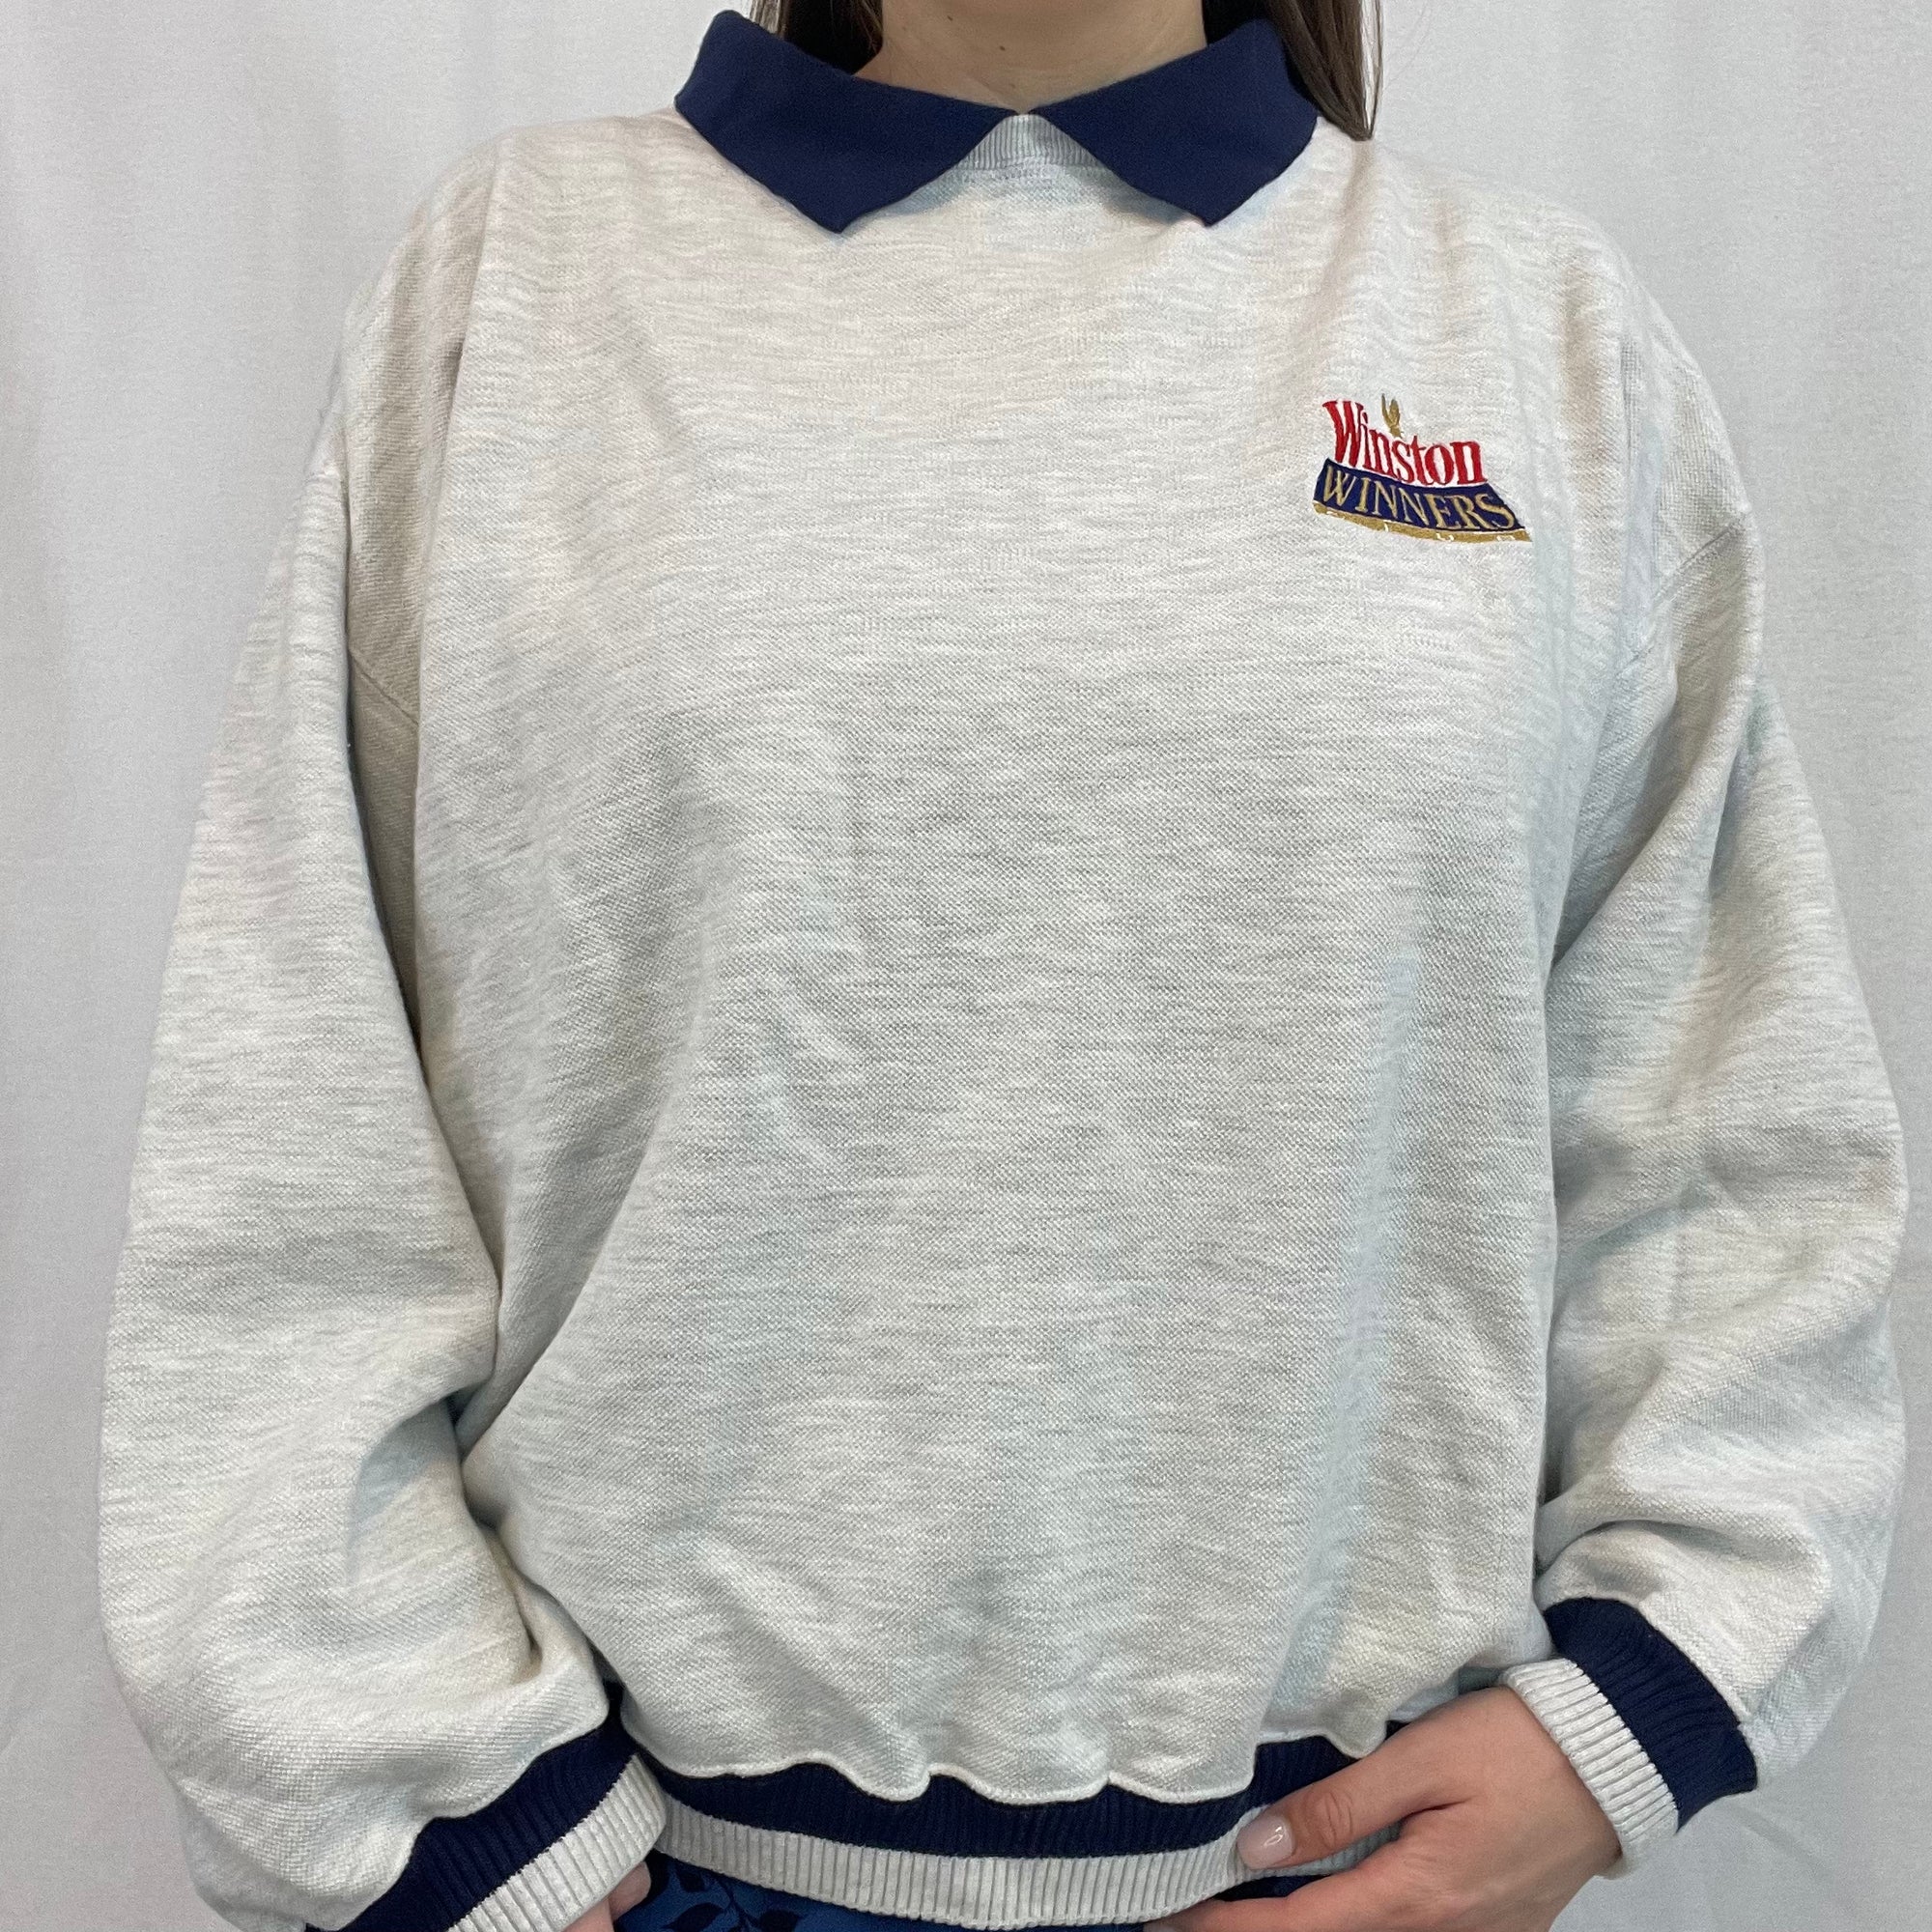 Vintage Winston Winners Race Club Collared Sweatshirt size XL